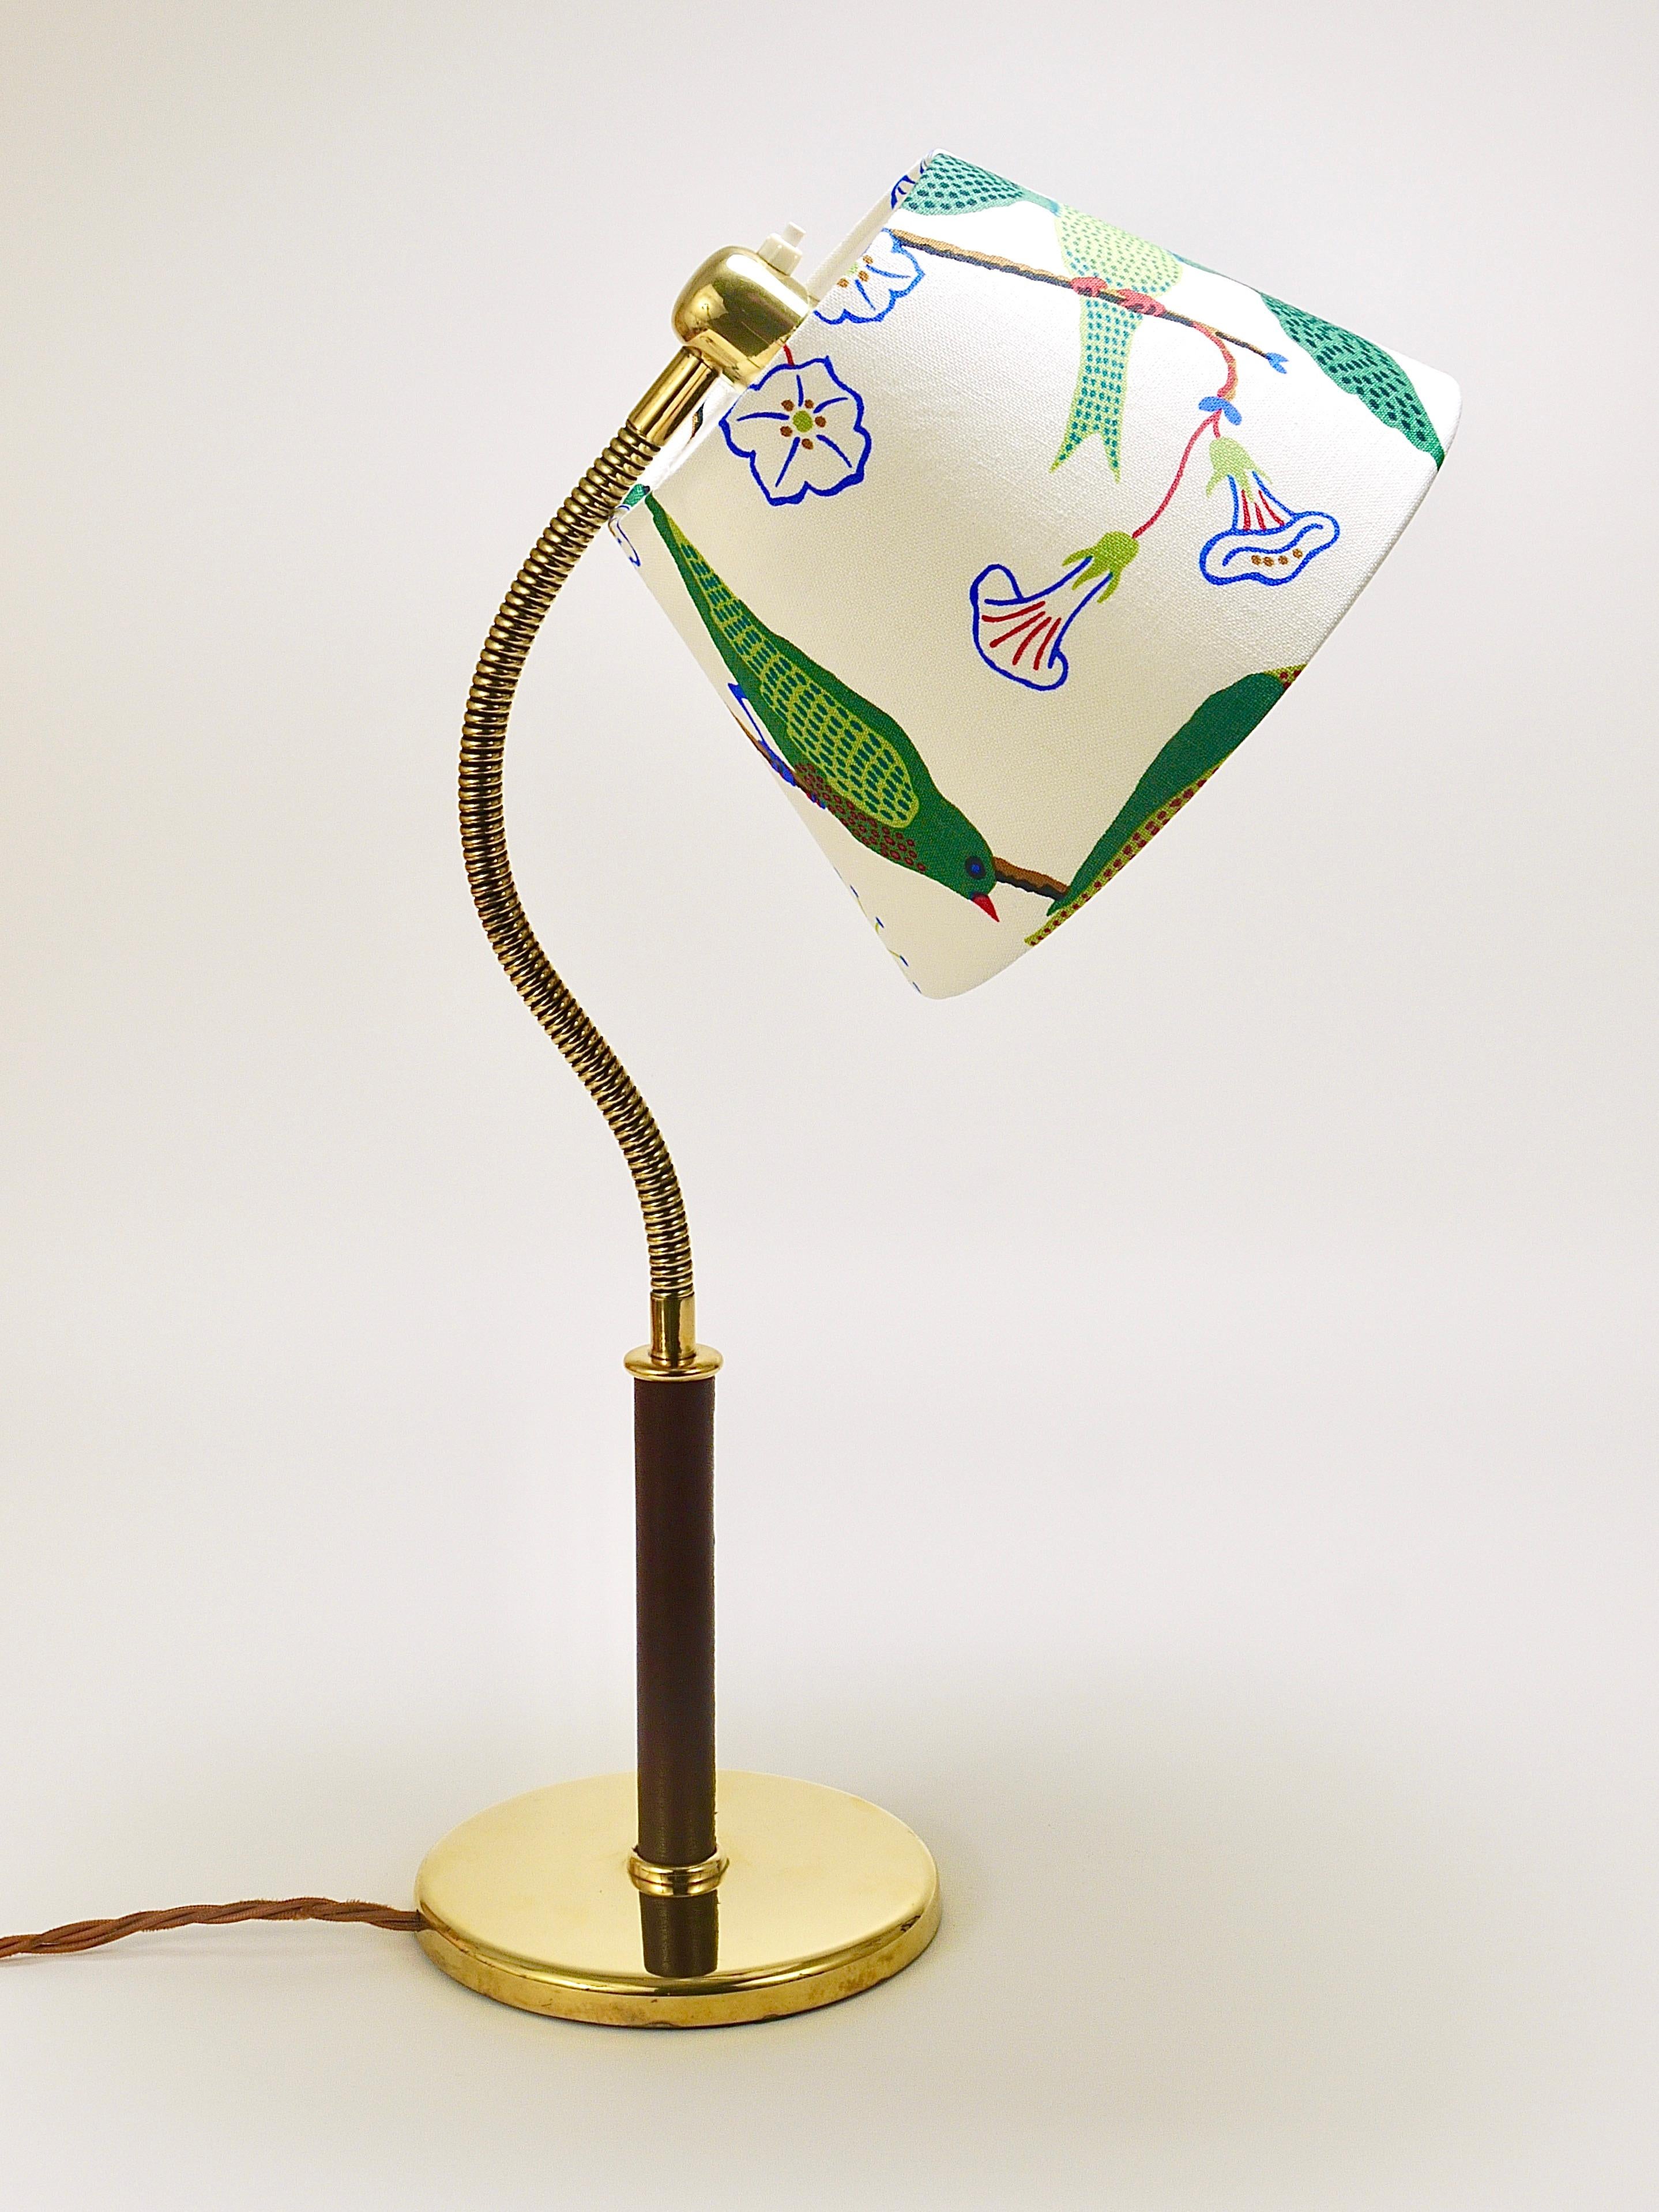 Josef Frank J.T. Kalmar Table Lamp Tisch-Überall, Brass & Leather, Austria, 1930 For Sale 8